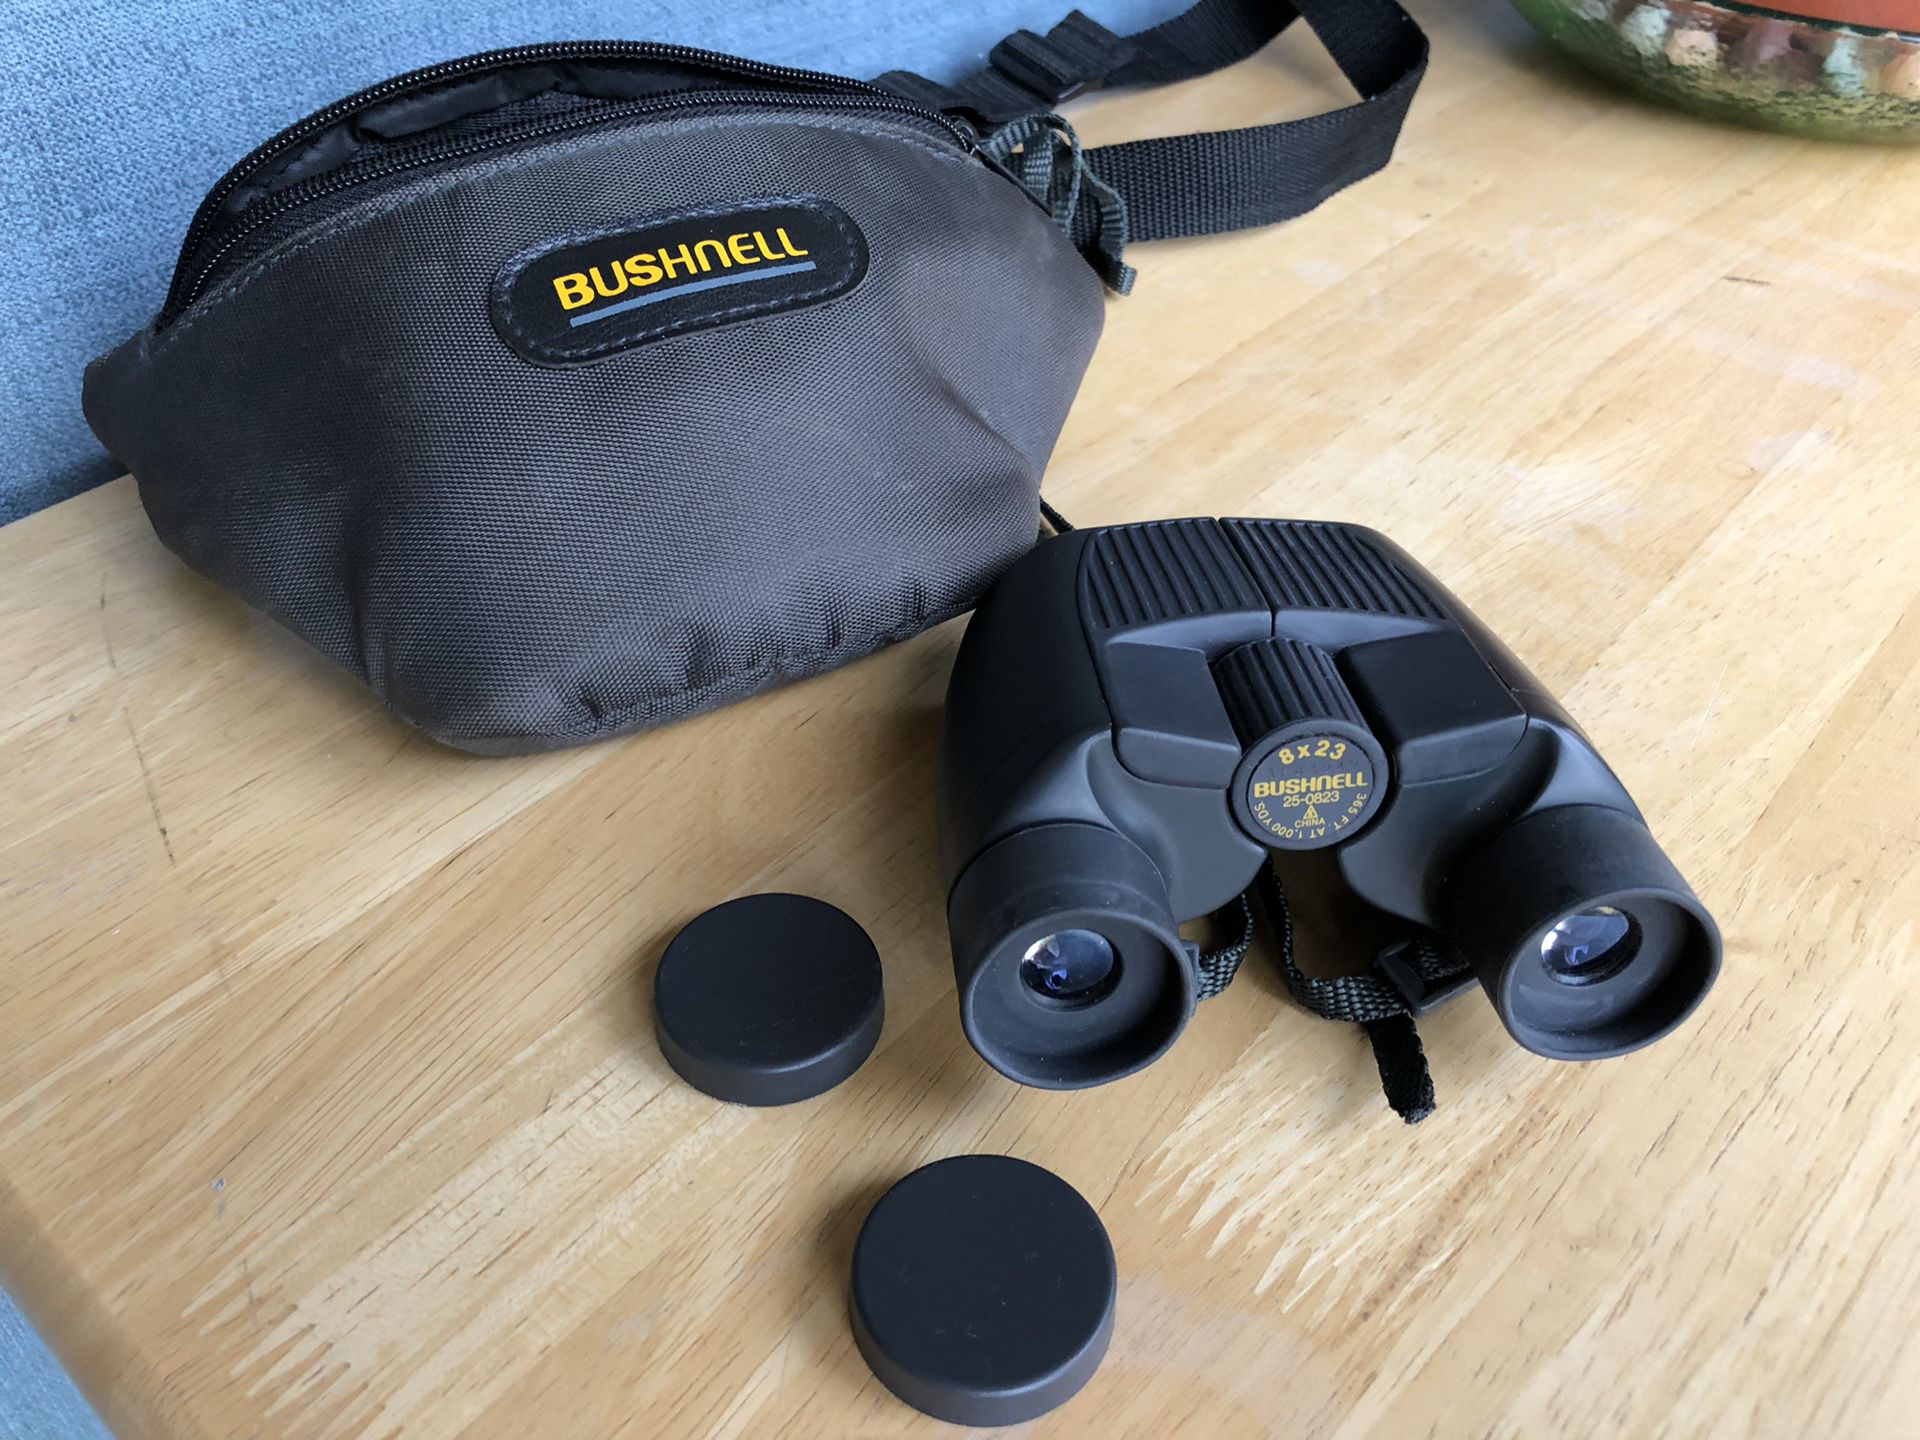 Bushnell 8x23 Binoculars 365 ft @1000 yds with soft case